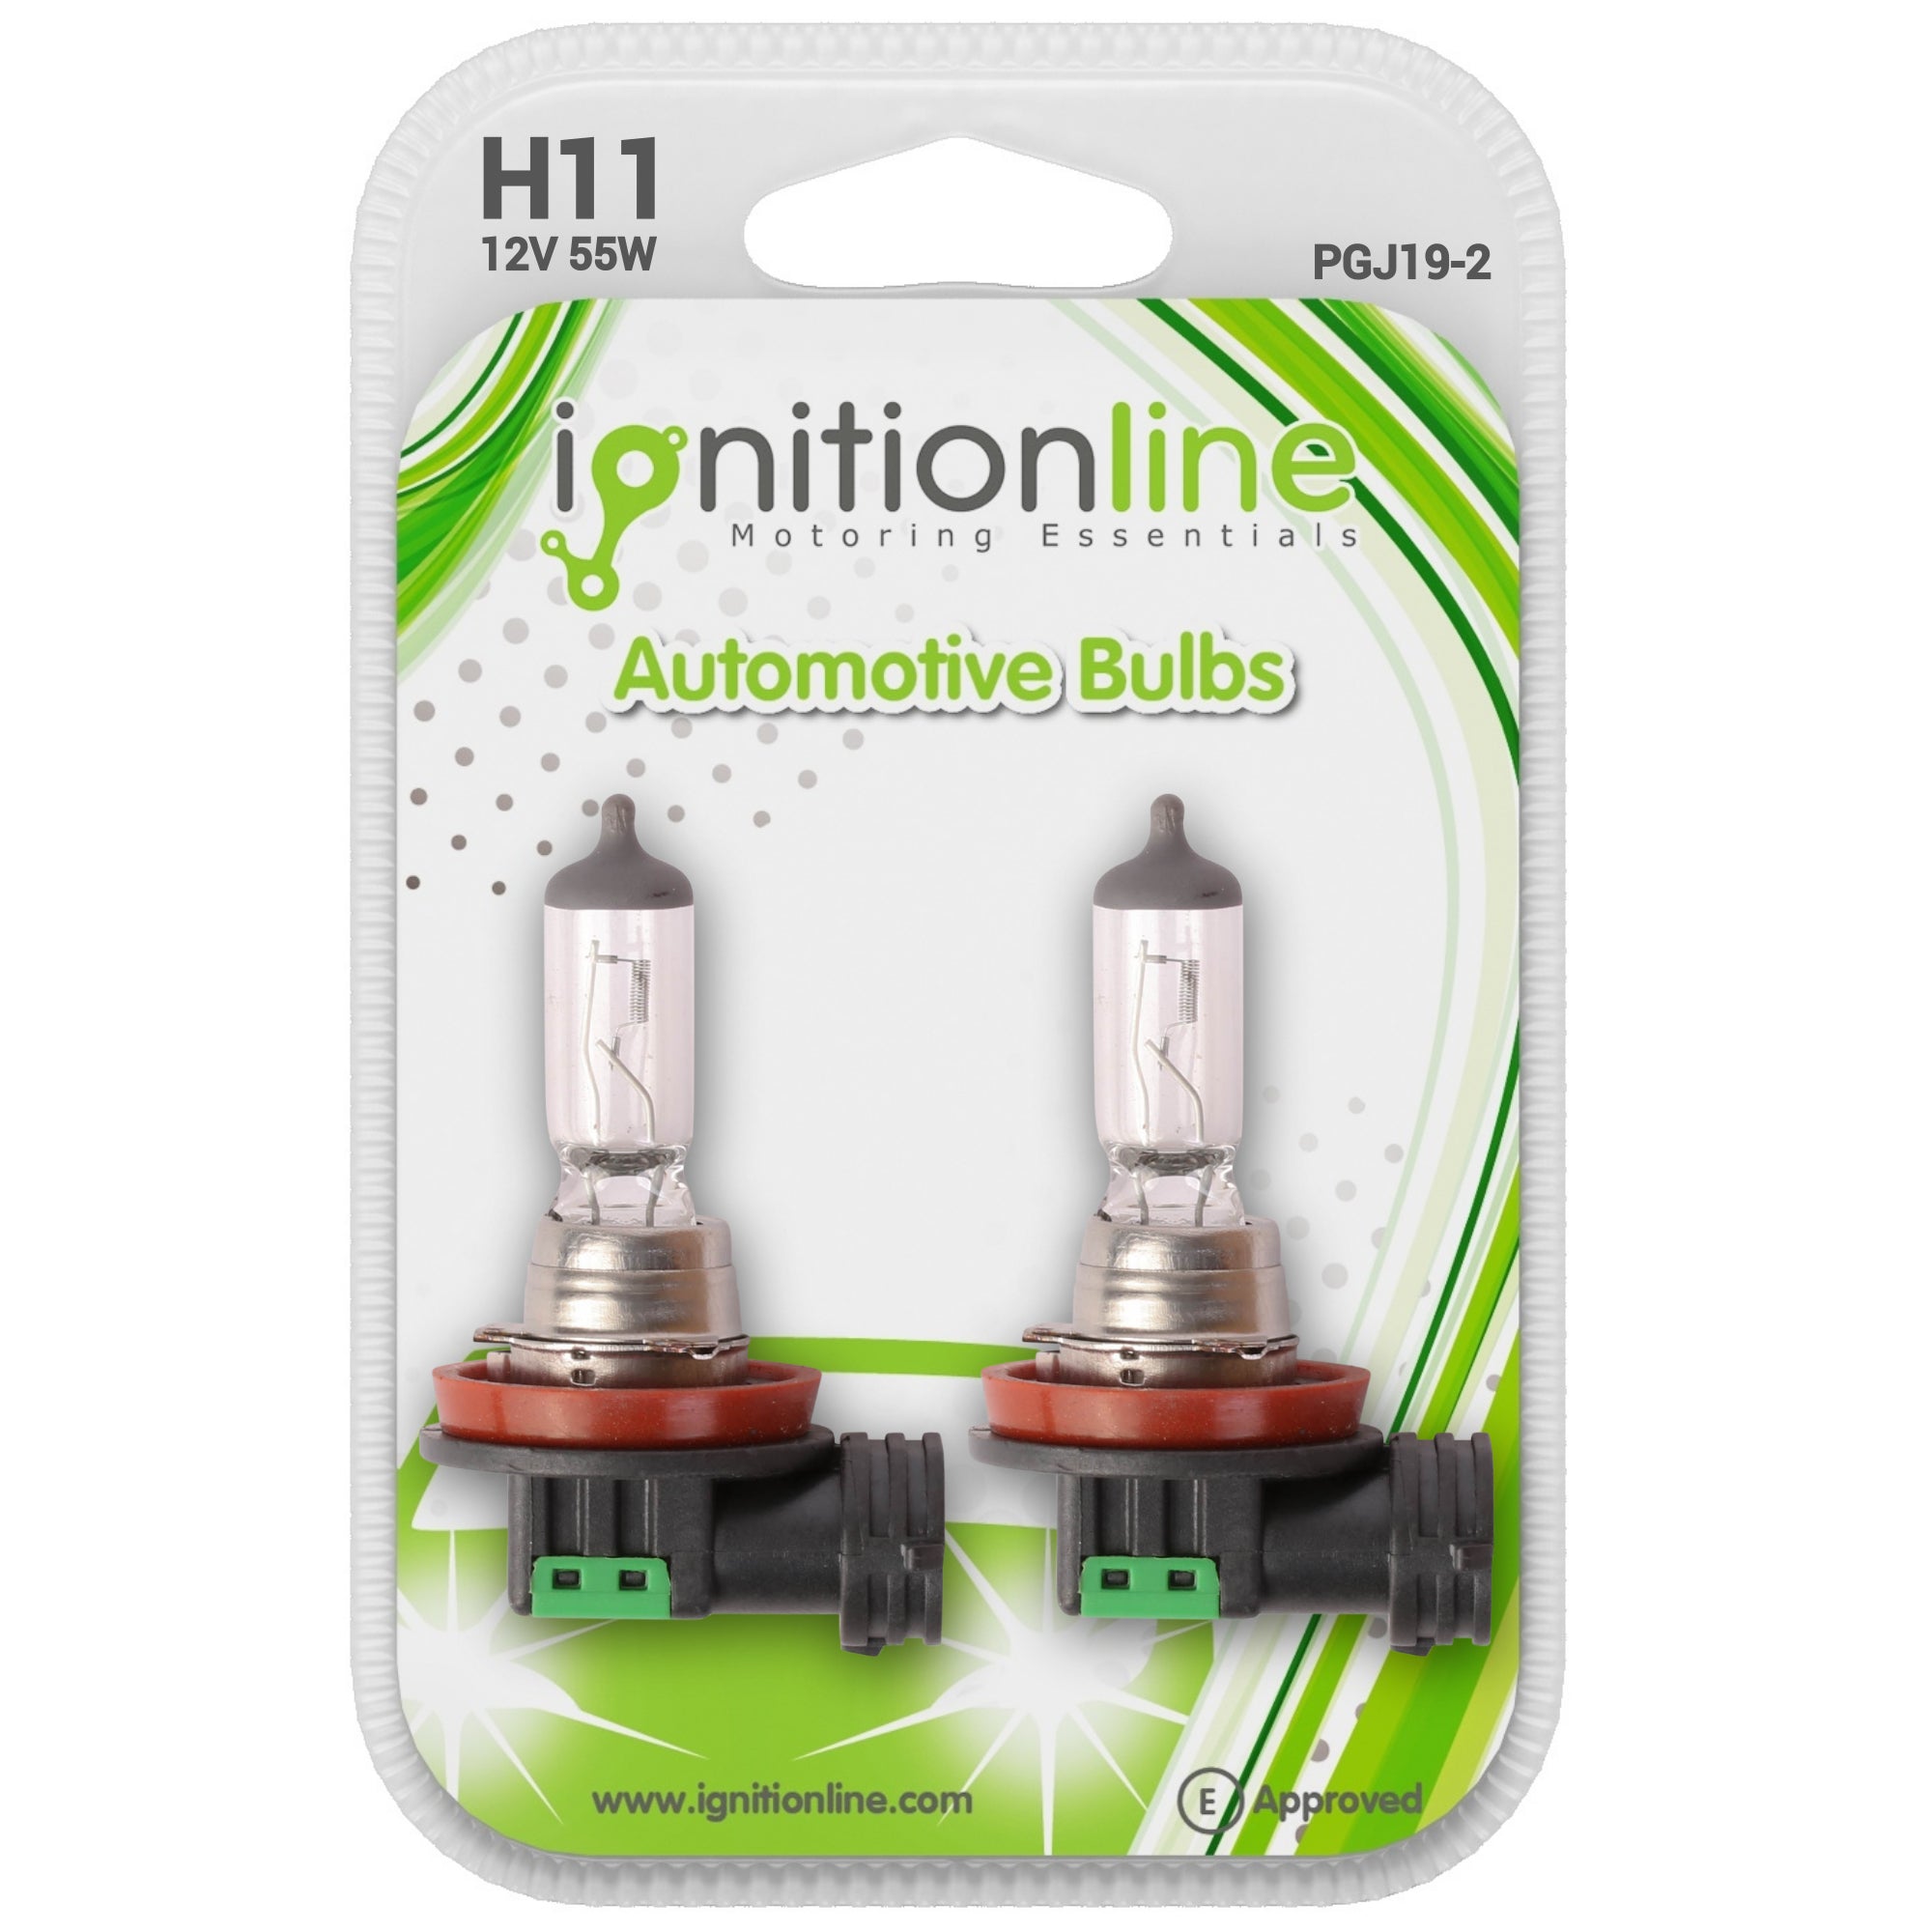 Ignitionline H11 12V 55W Halogen Headlight Bulbs (Twin Pack) PGJ19-2